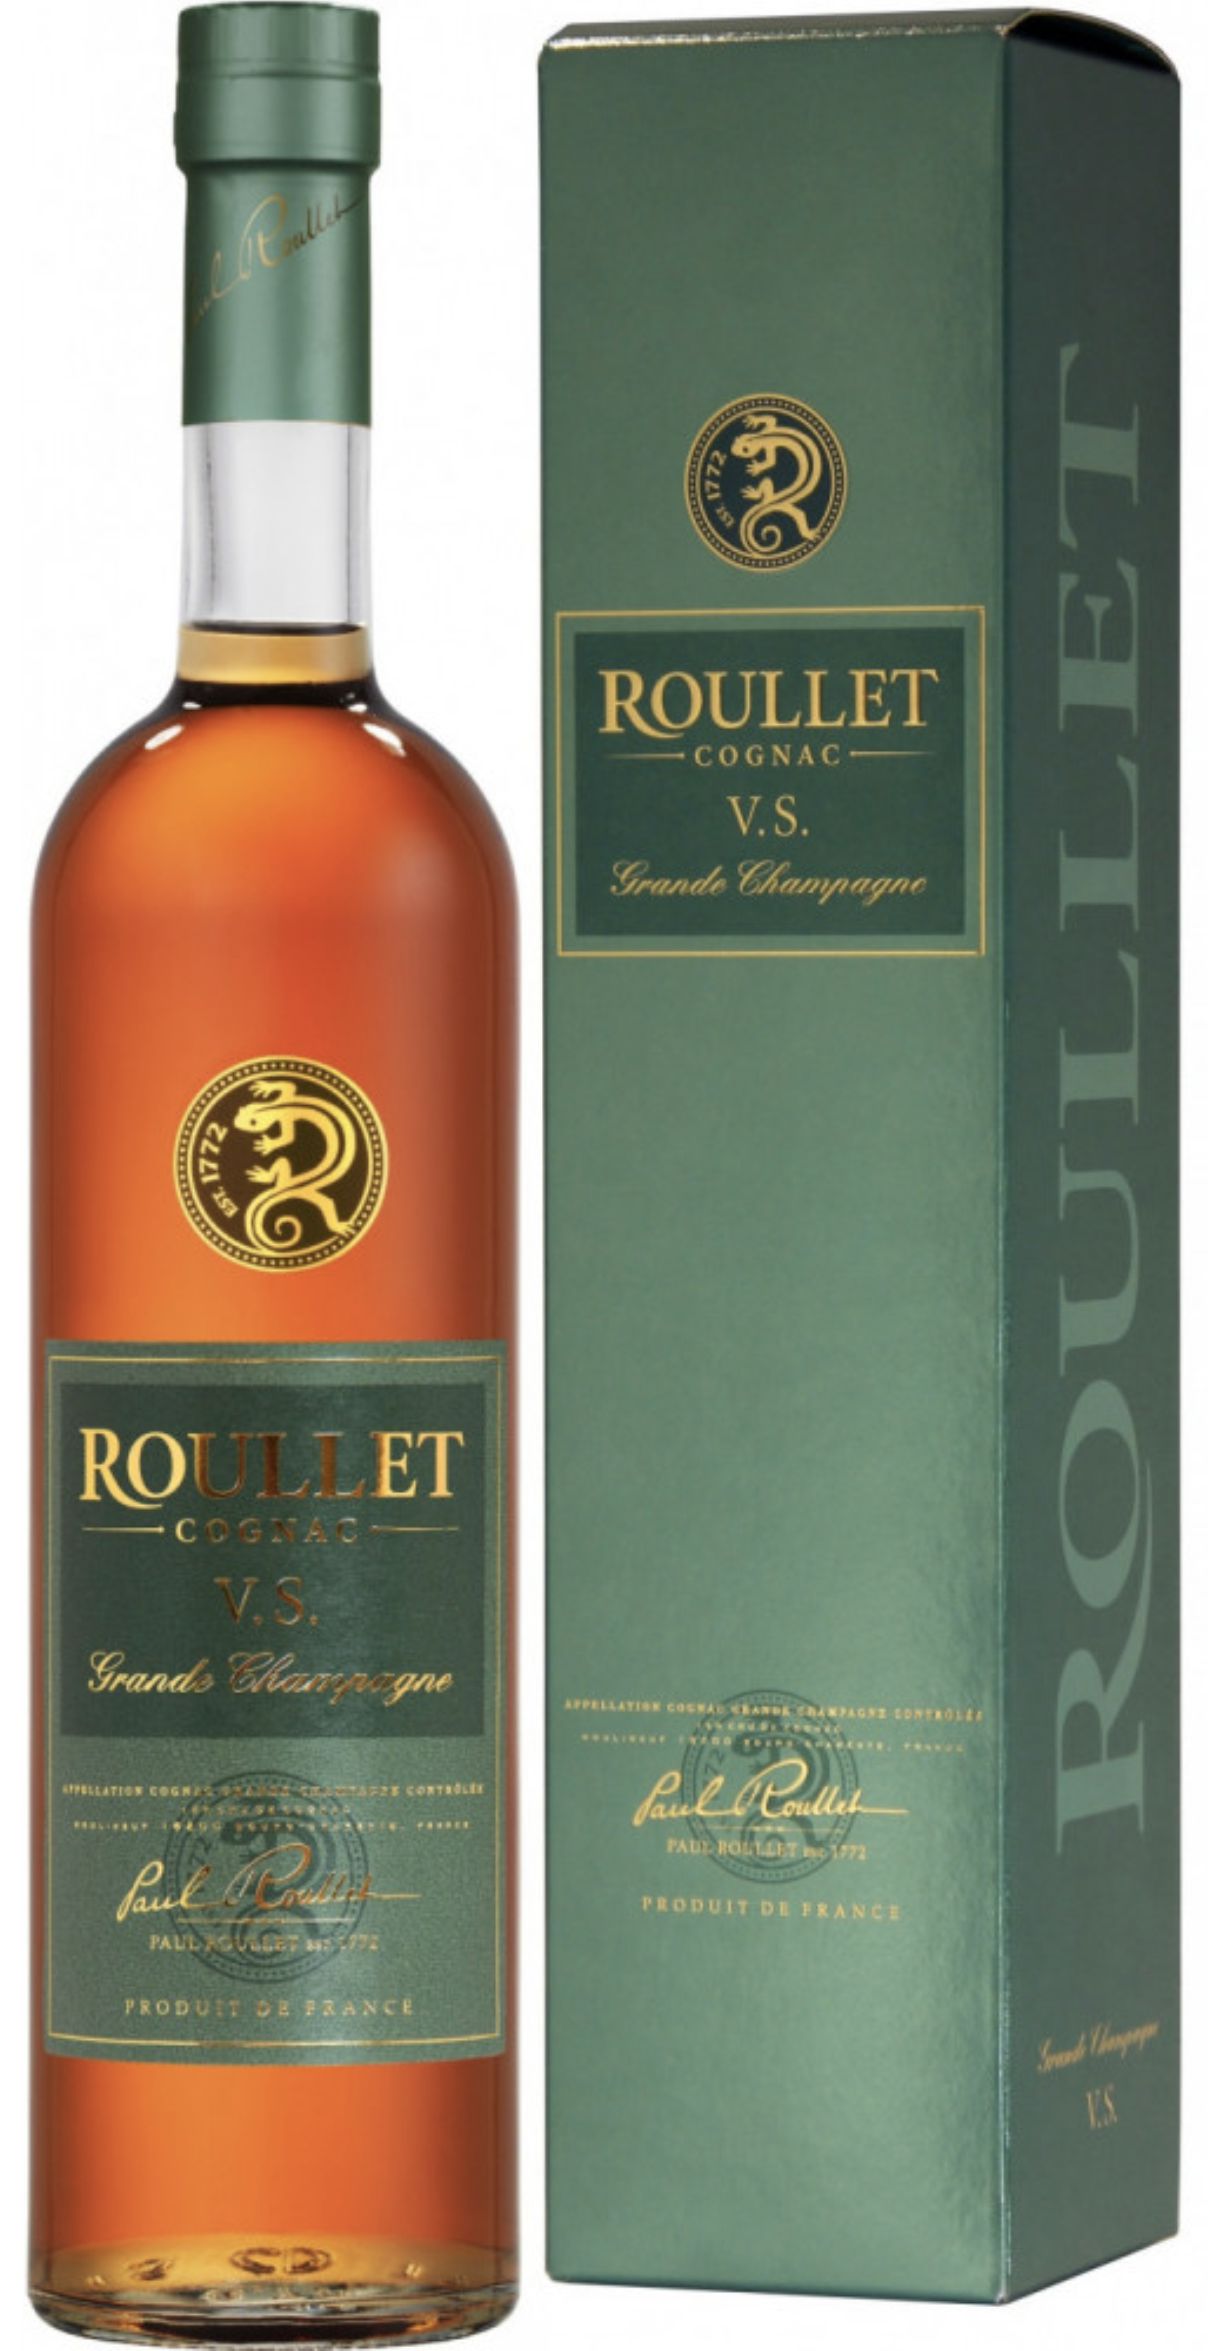 Roullet cognac цена. Коньяк французский Рулле Гранд шампань vs. Коньяк Франция Рулле вс. Коньяк Roullet v.s 0.5. Коньяк Рулле вс 40% 0,7л п/у Франция.